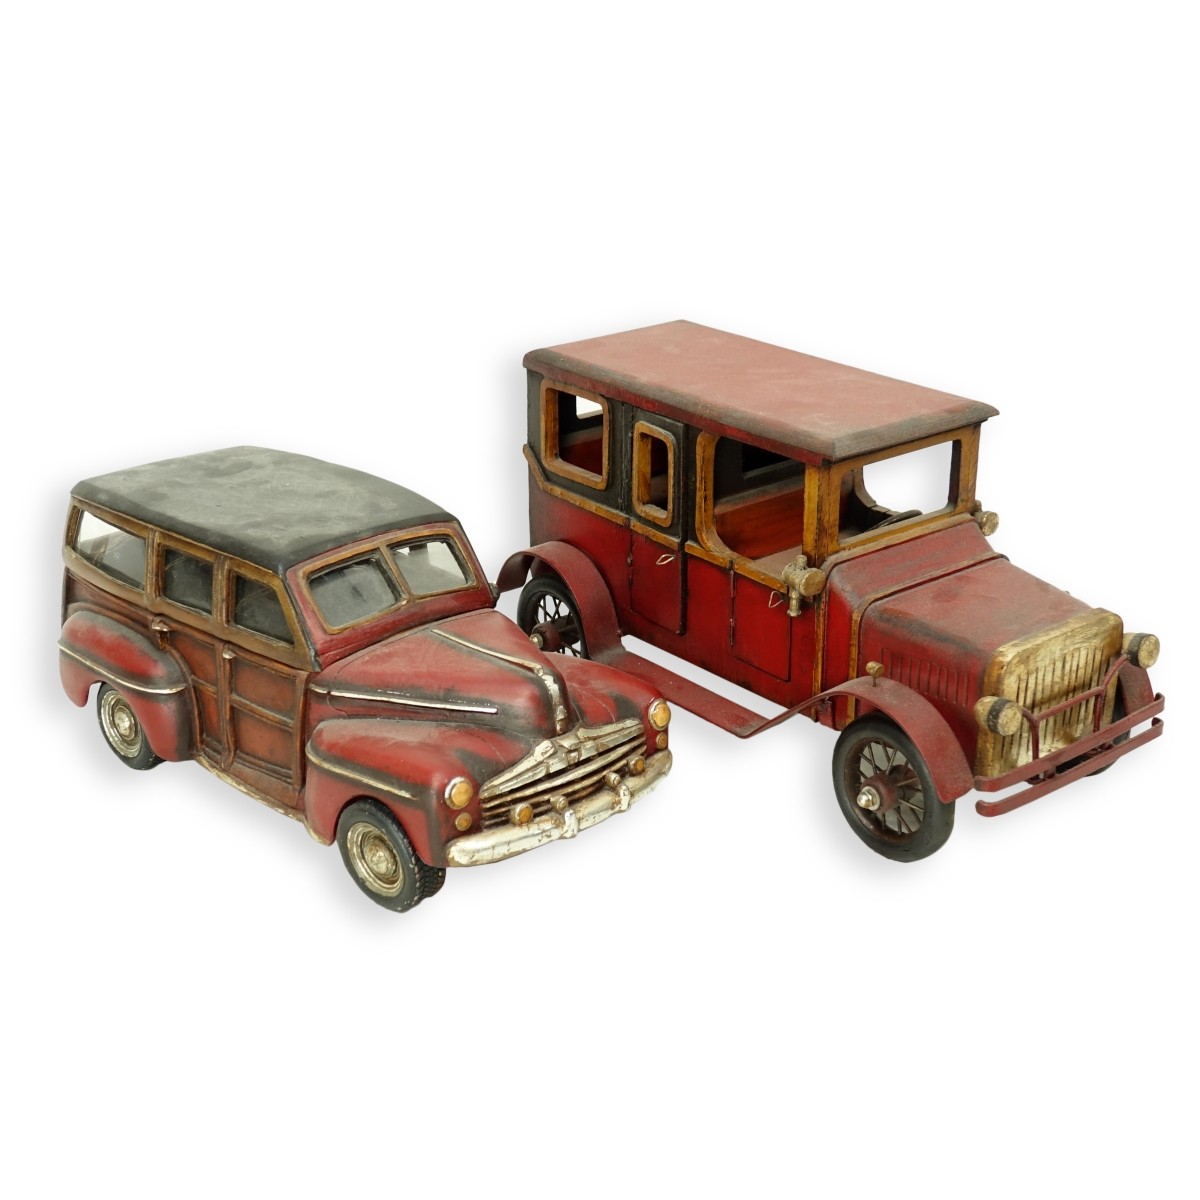 Two Vintage Model Cars